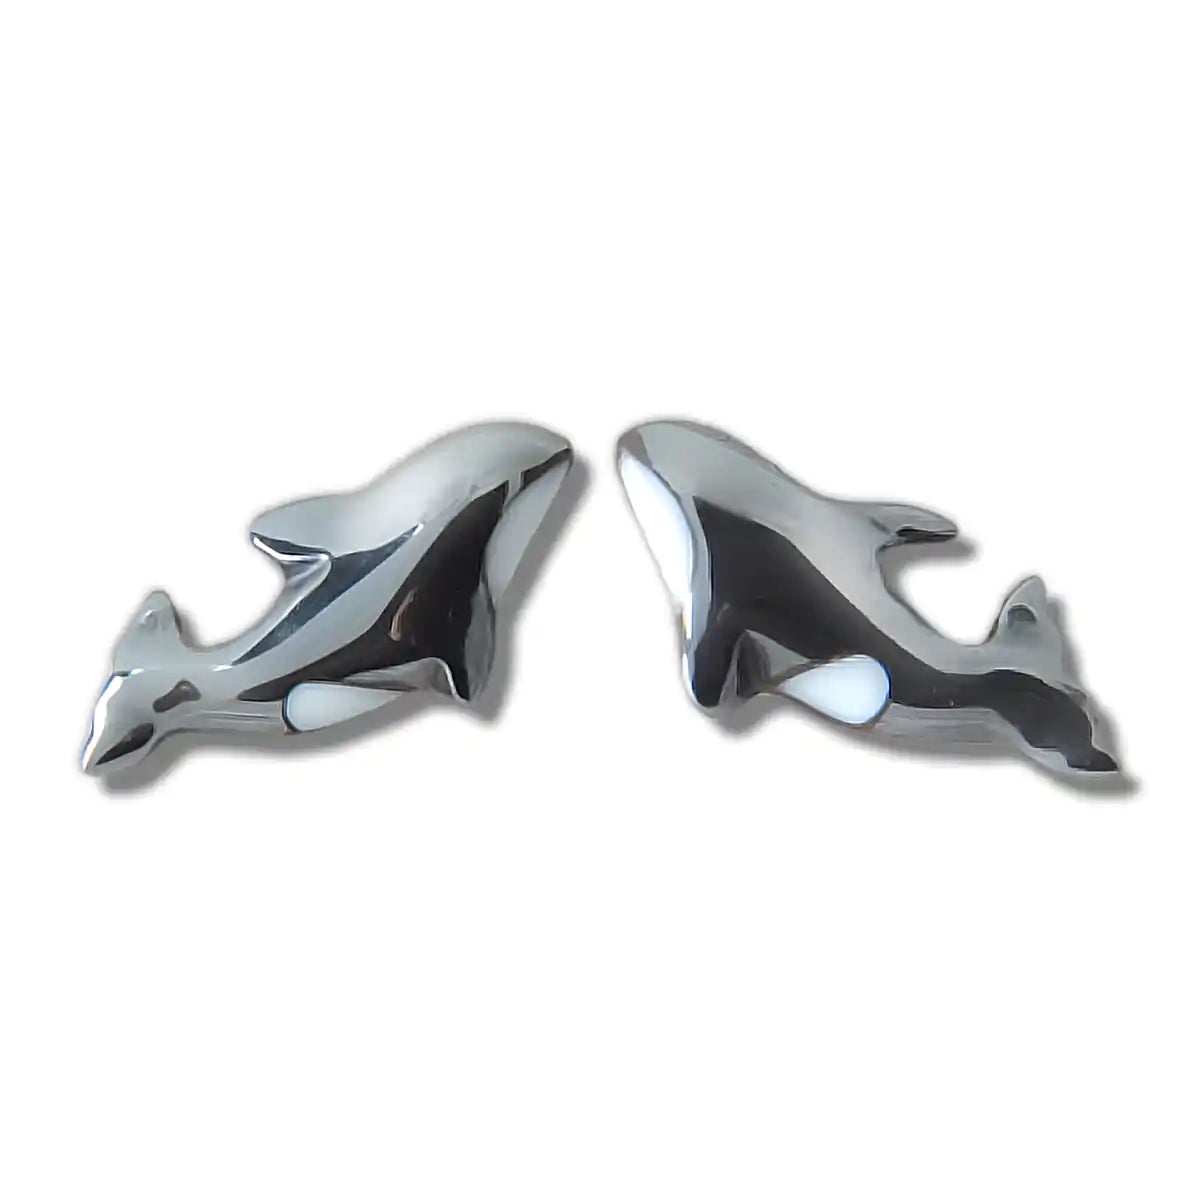 Hematite orca whale dance earrings